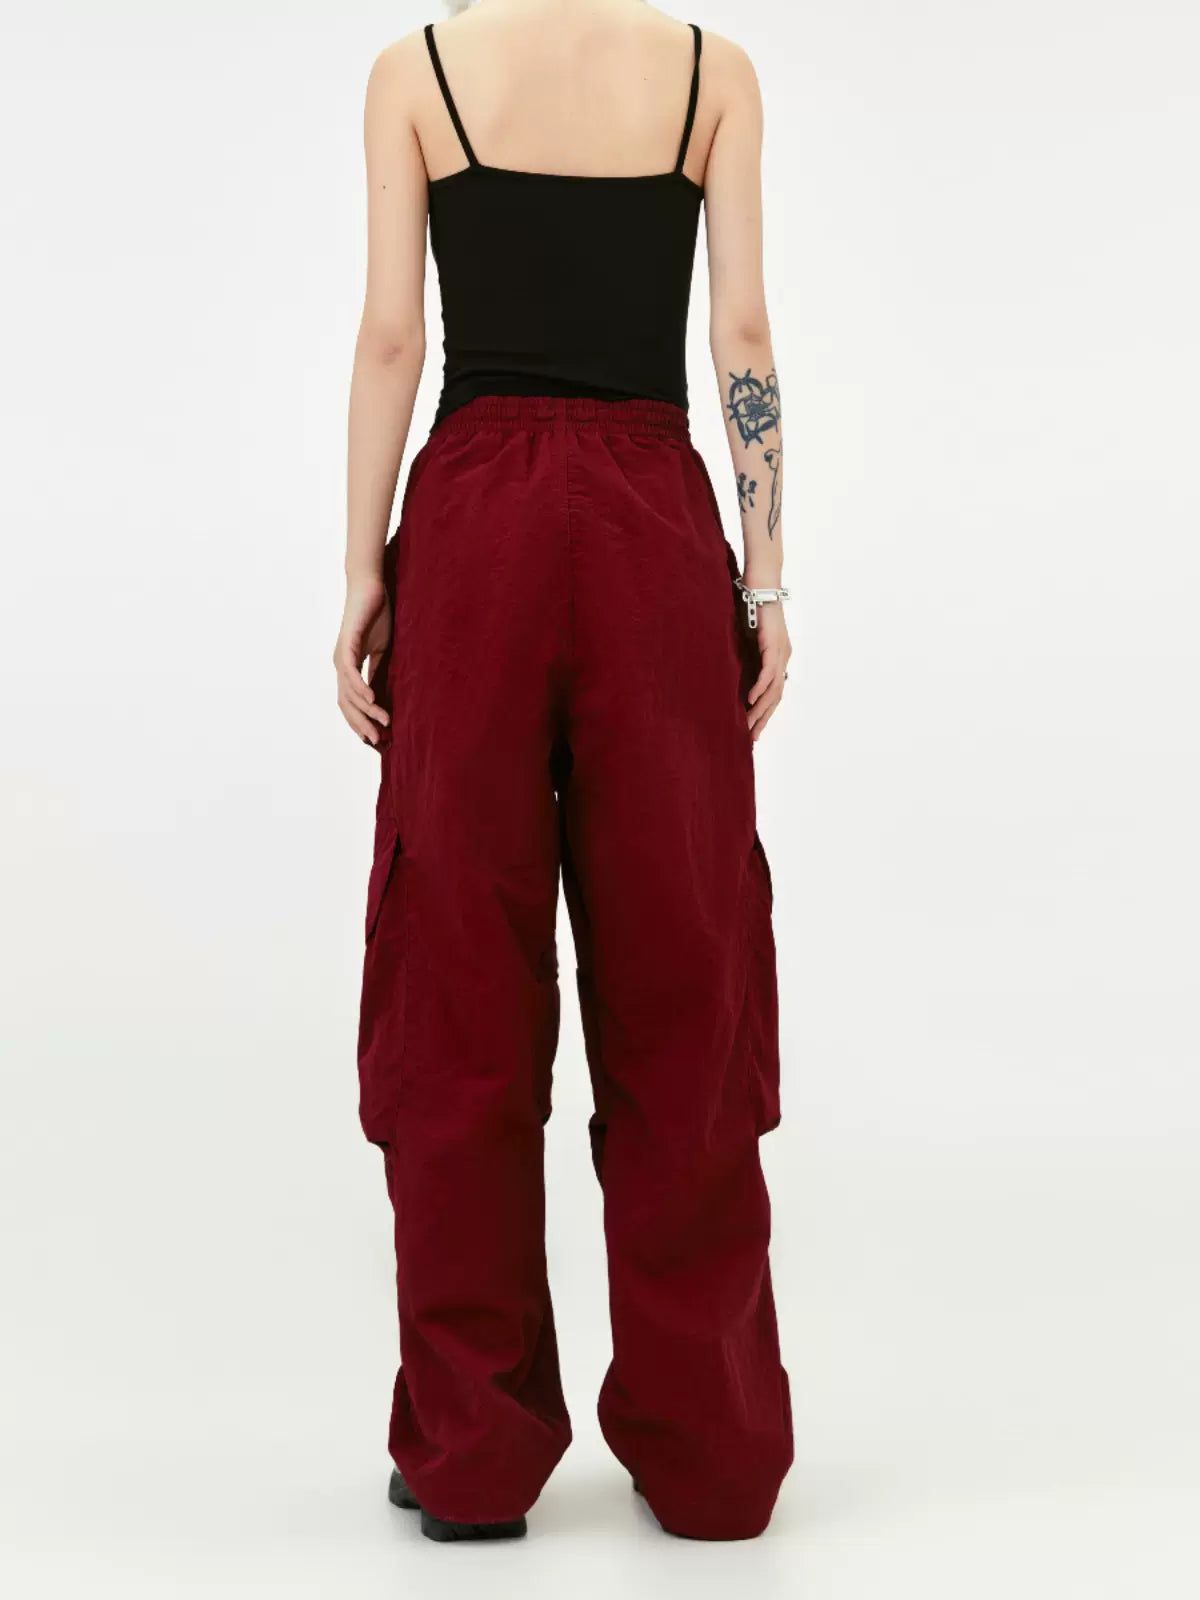 Drawstring Wide Pocket Pants Korean Street Fashion Pants By Made Extreme Shop Online at OH Vault